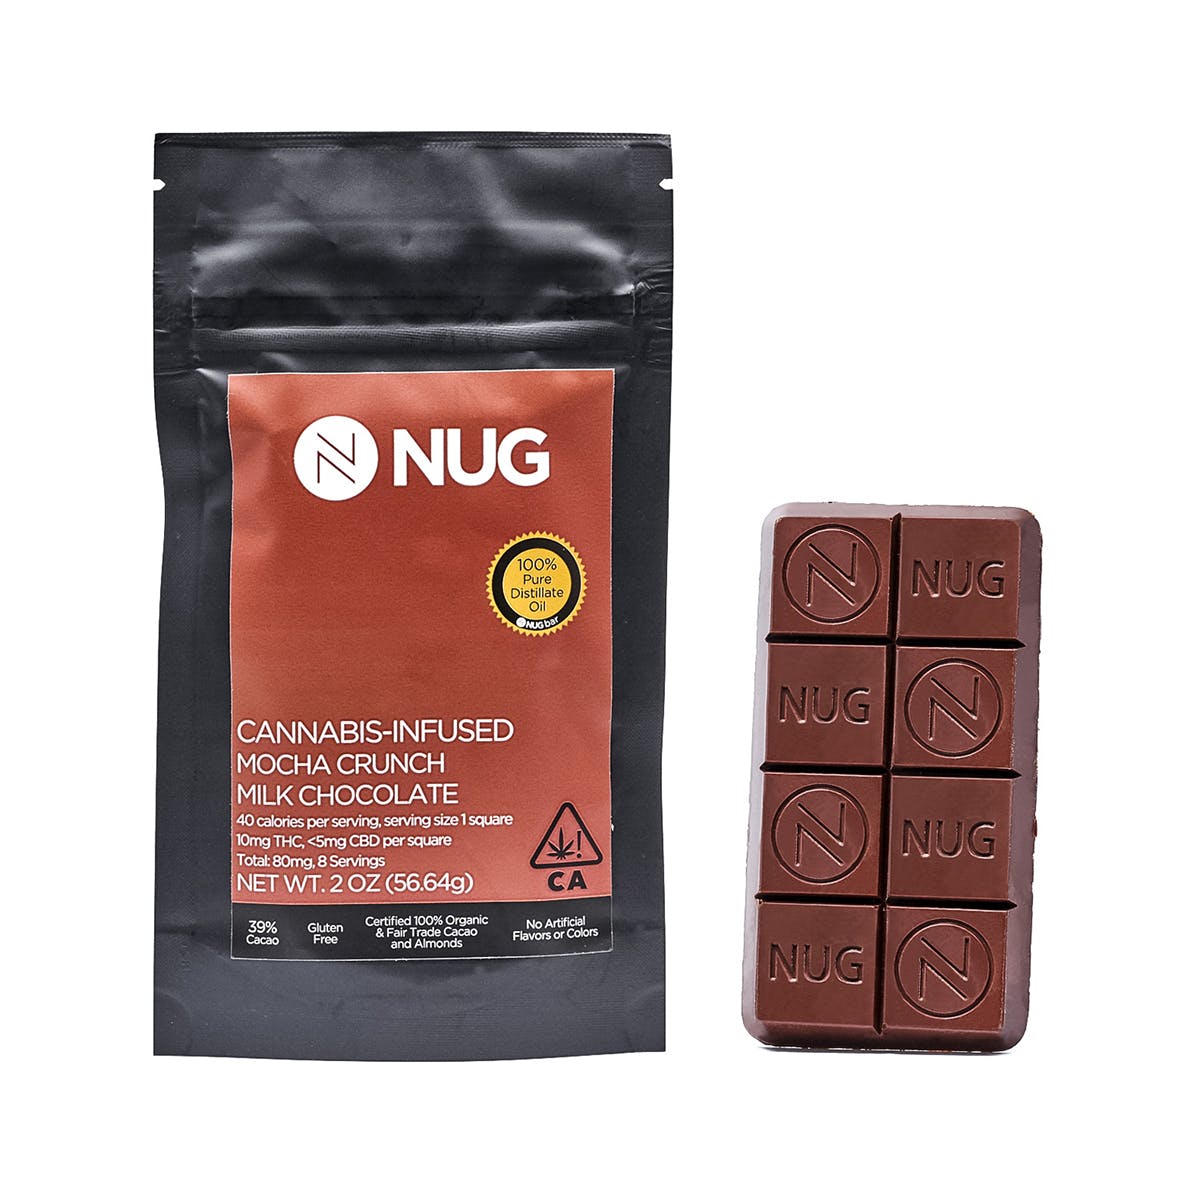 NUG Chocolate Bar - Mocha Crunch 80mg